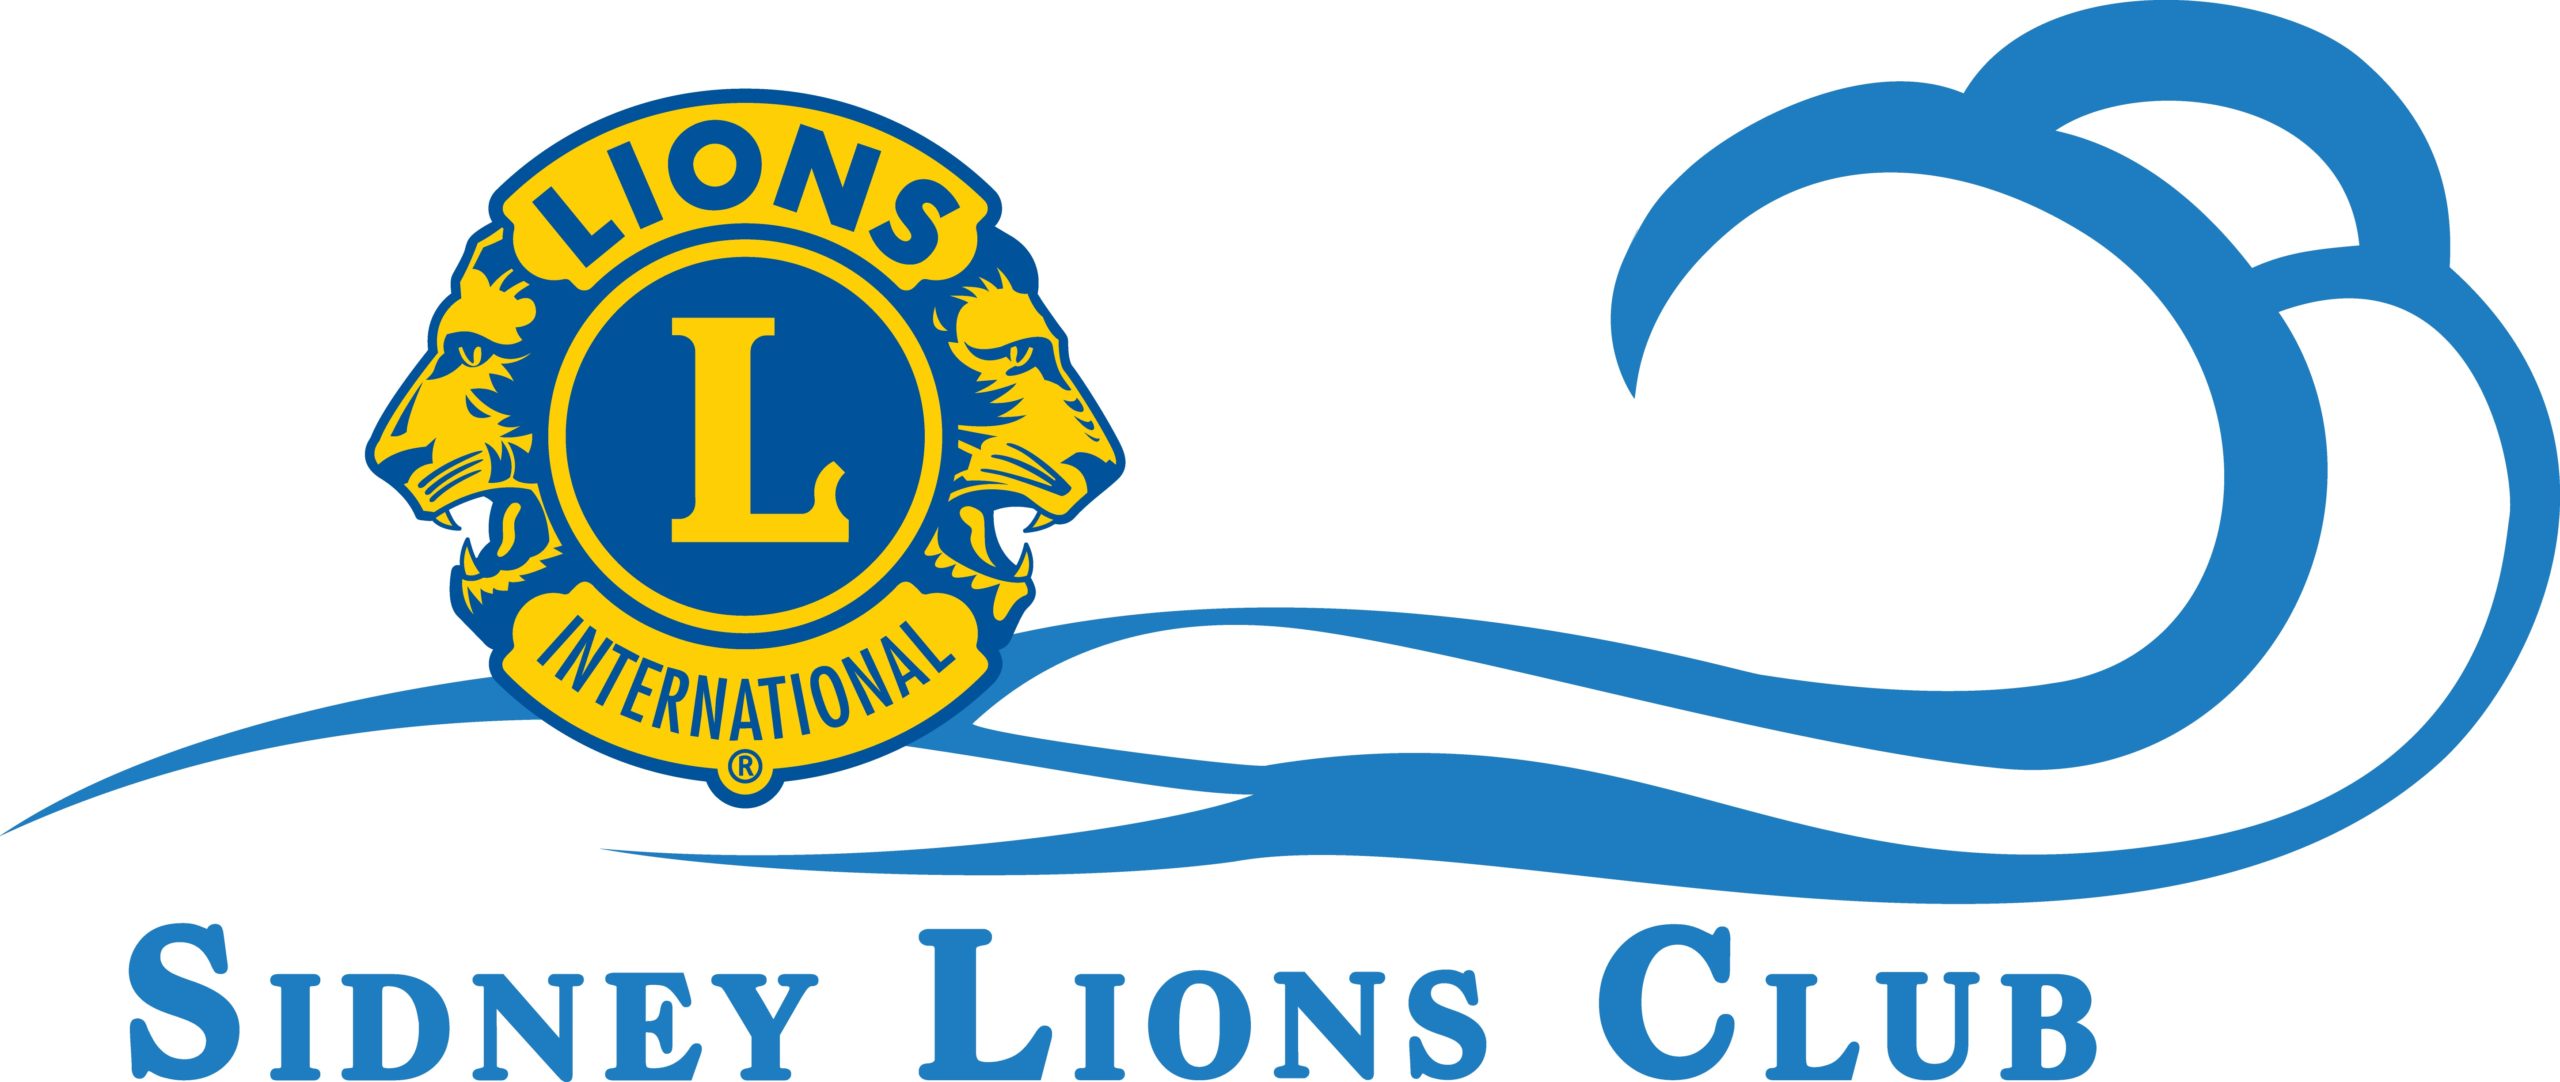 Sidney Lions